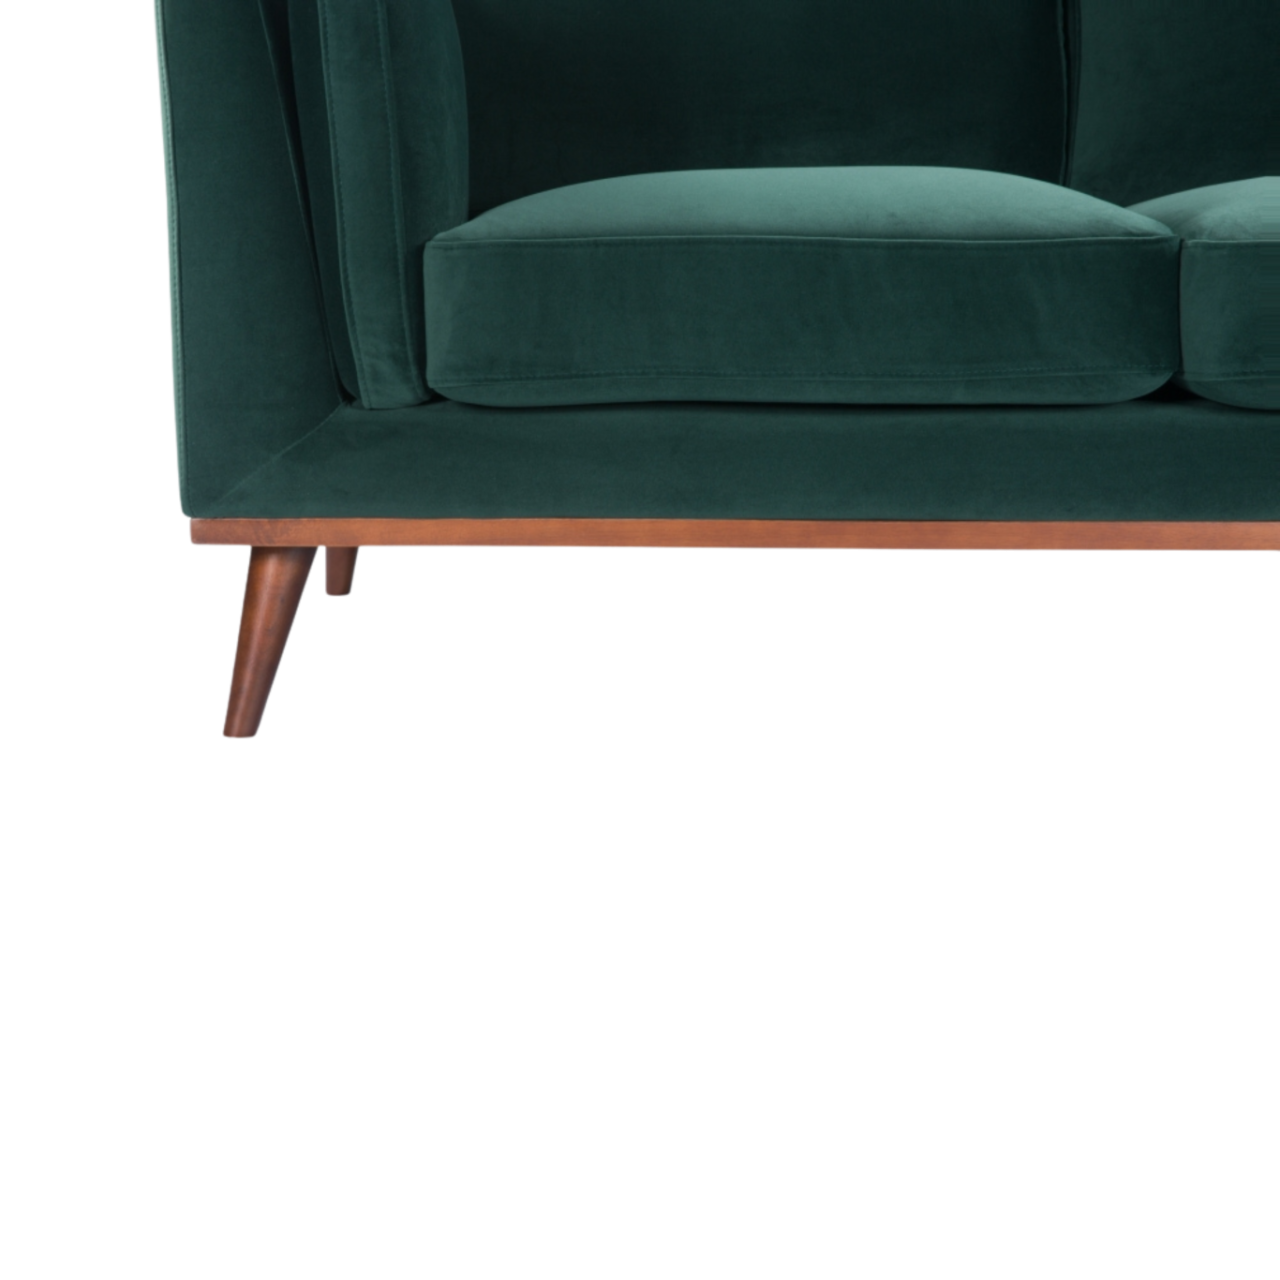 detail of detail of Simple, modern shaped 2 seater sofa in emerald green velvet upholstery